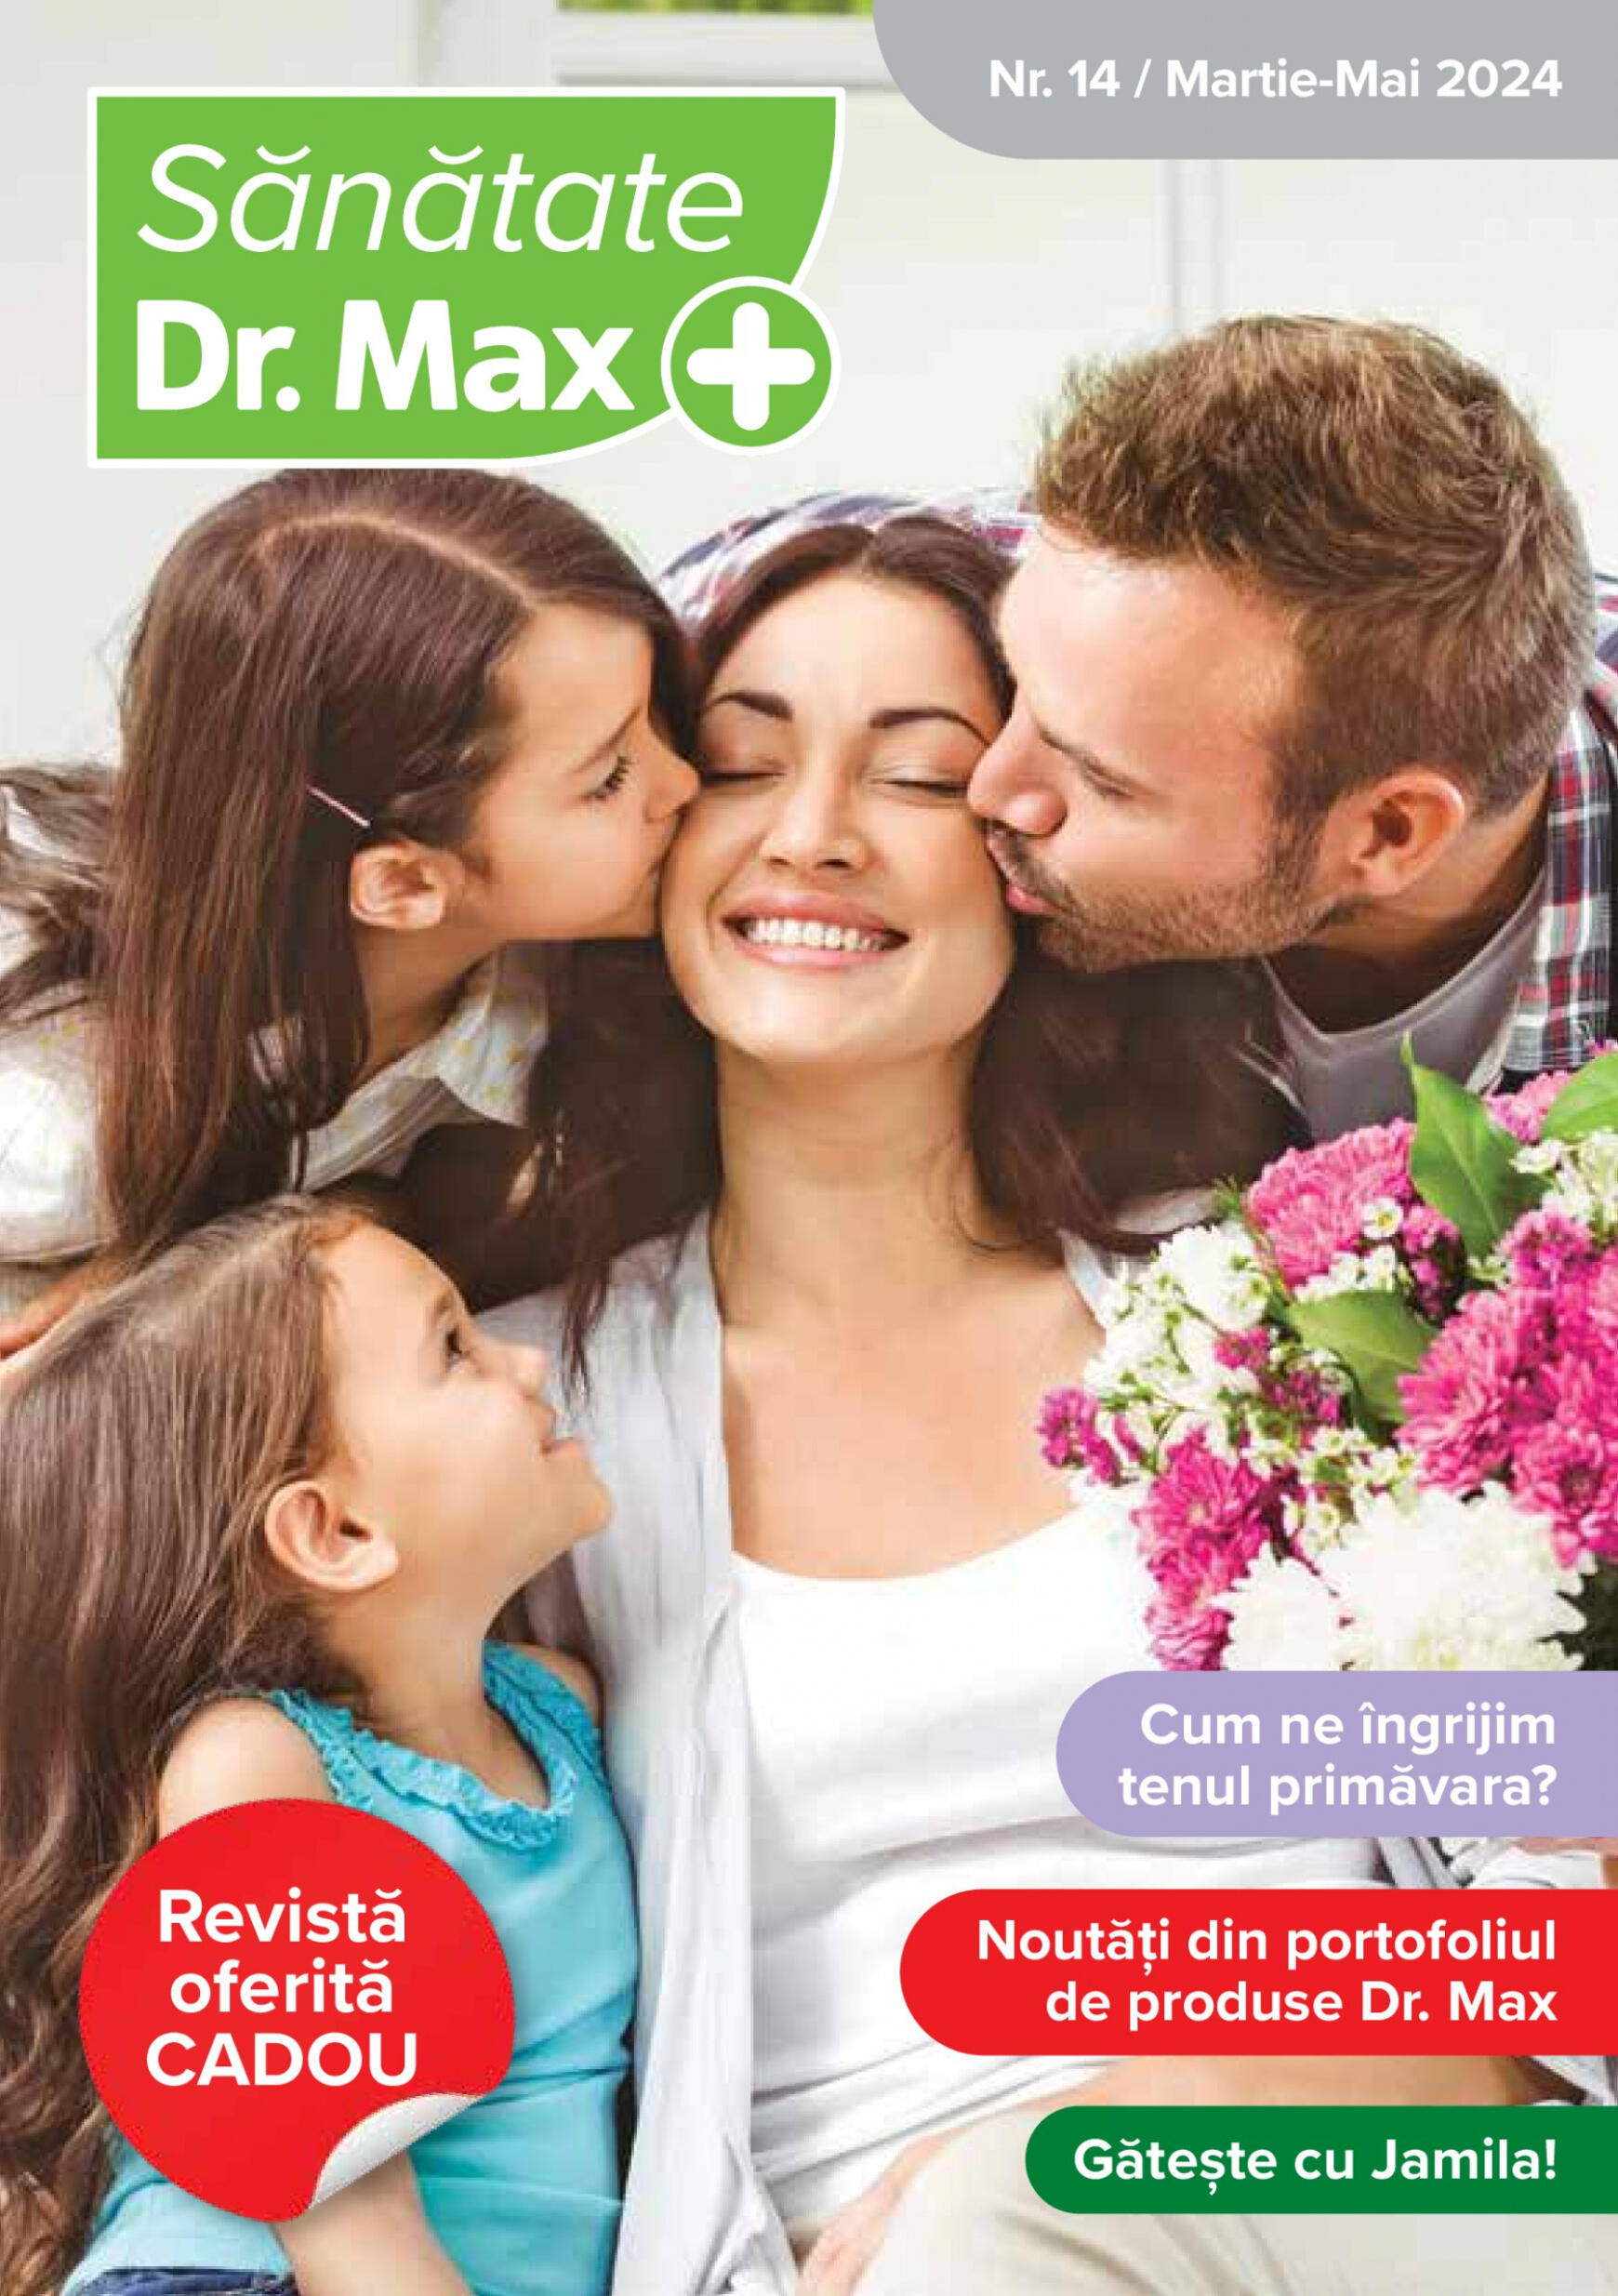 dr-max - Dr. Max - sănătate valabil de 01.03.2024